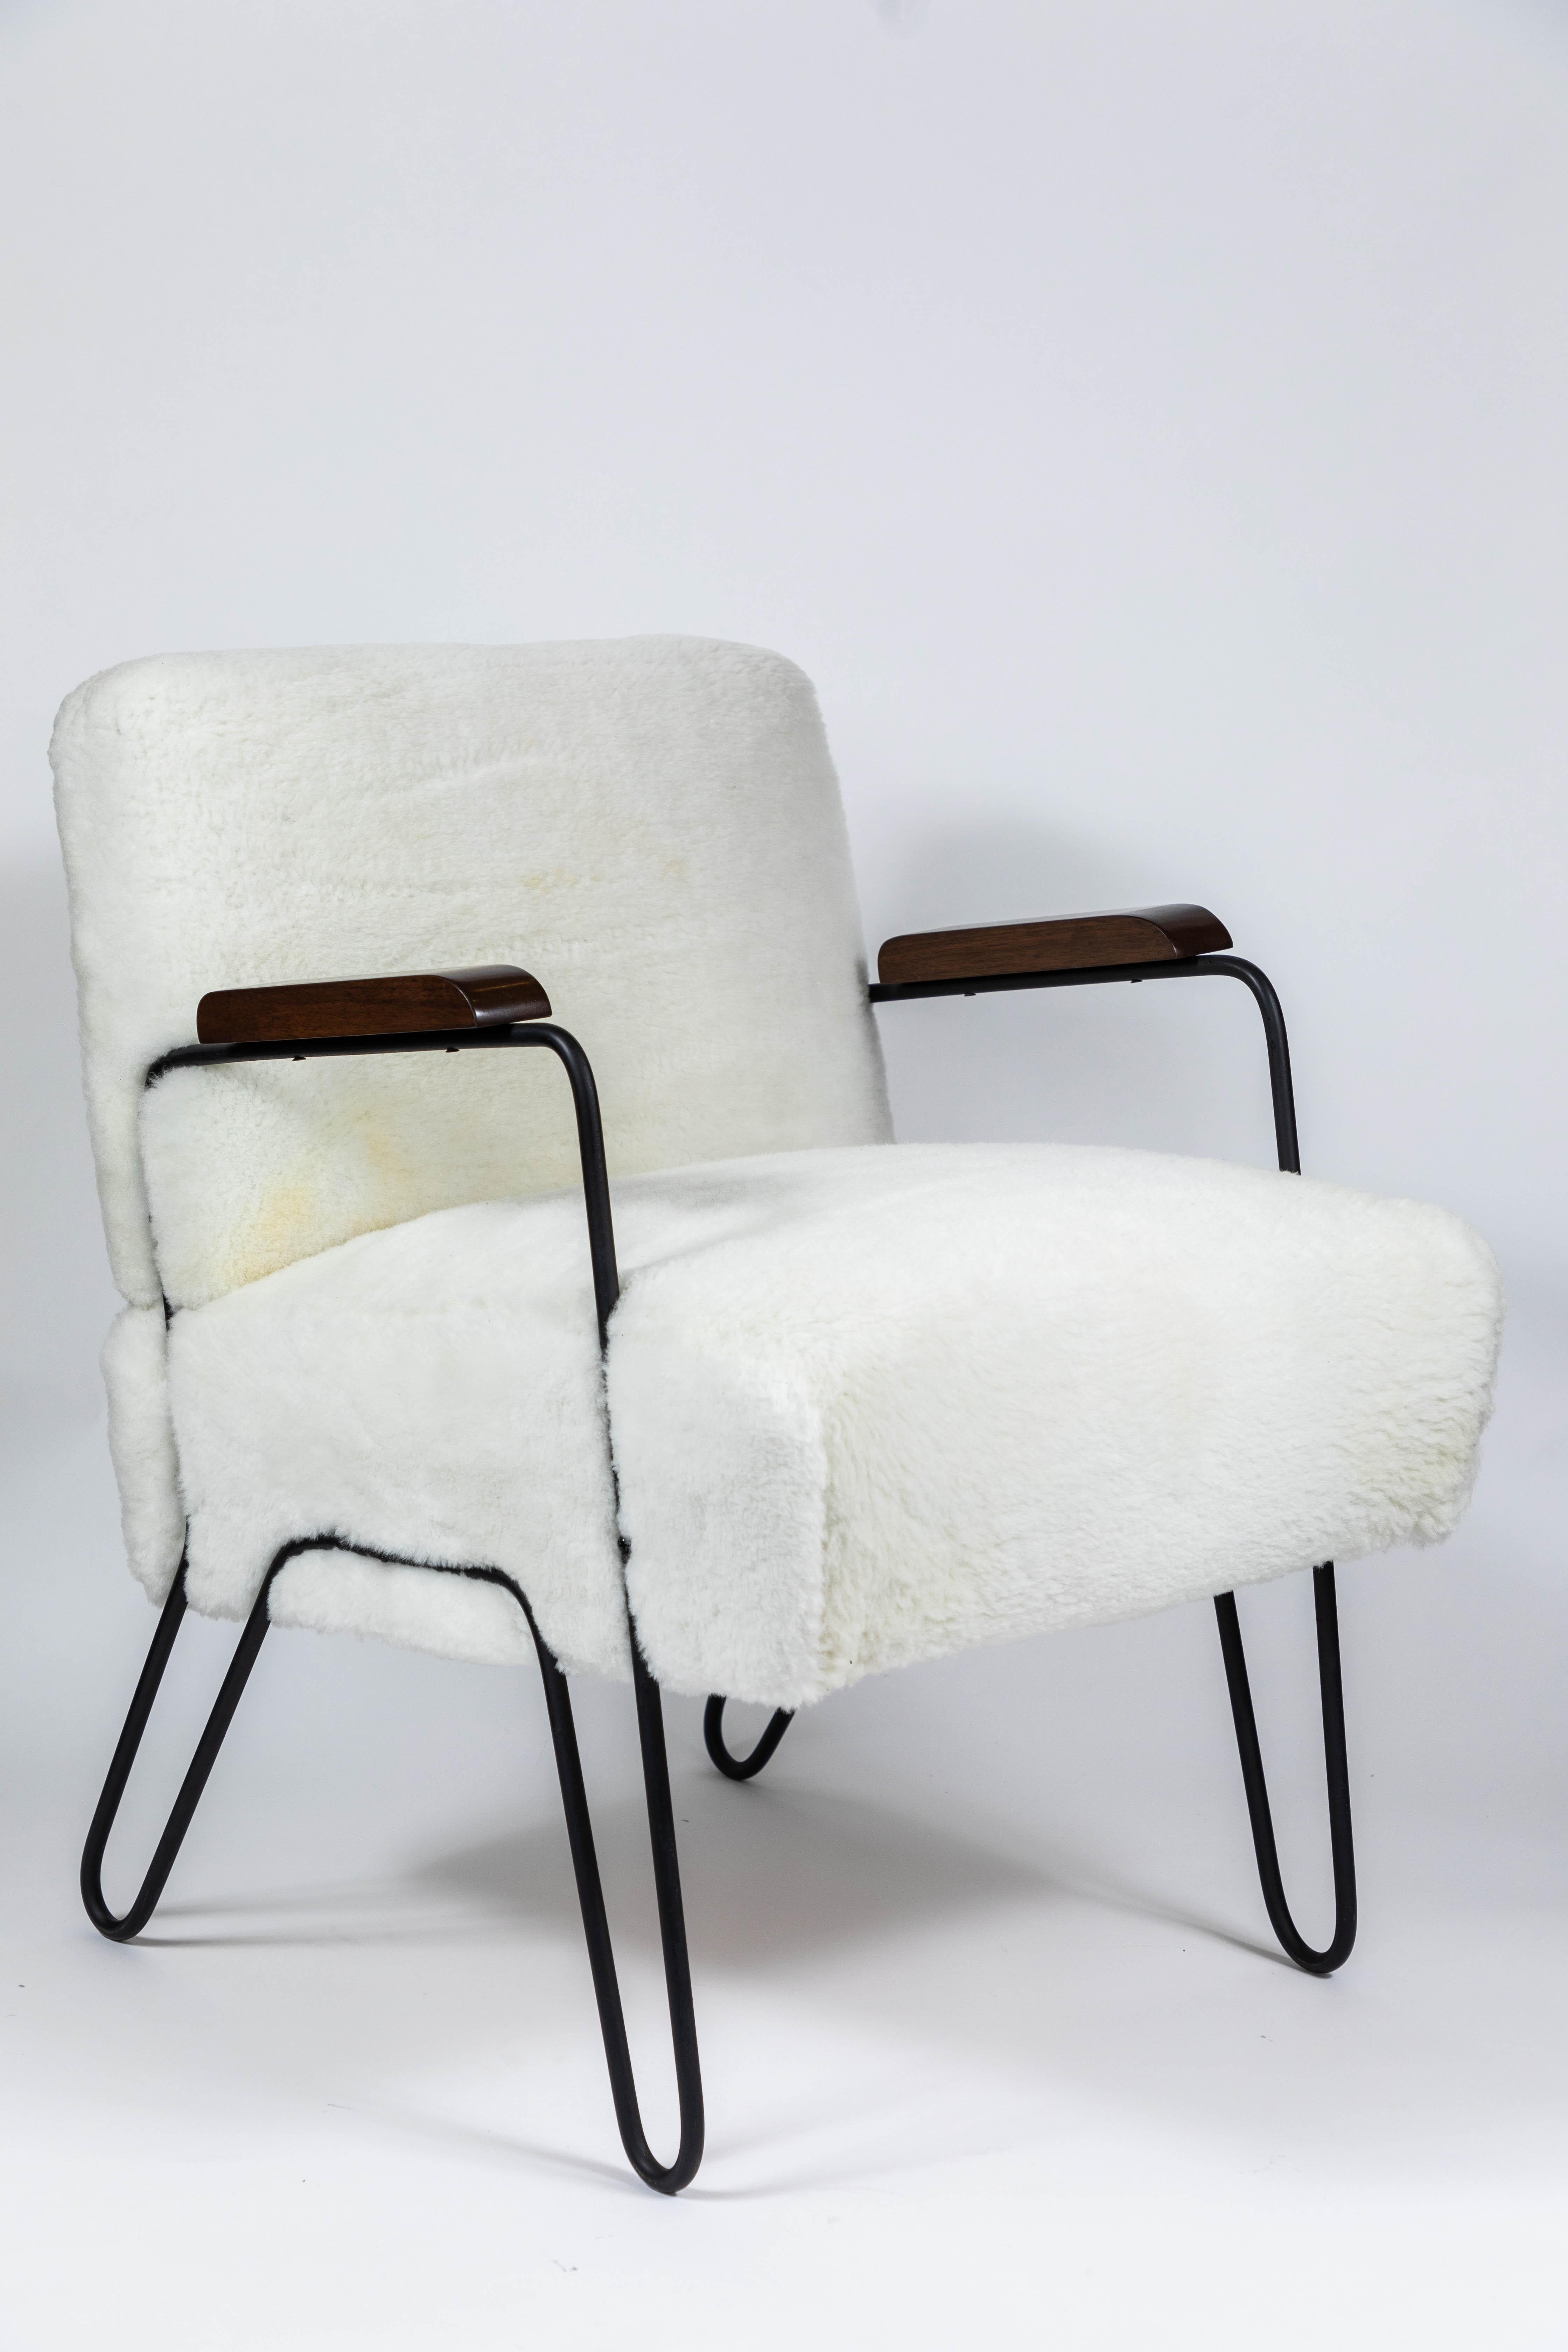 Custom Made Midcentury Style Hairpin Chair 1